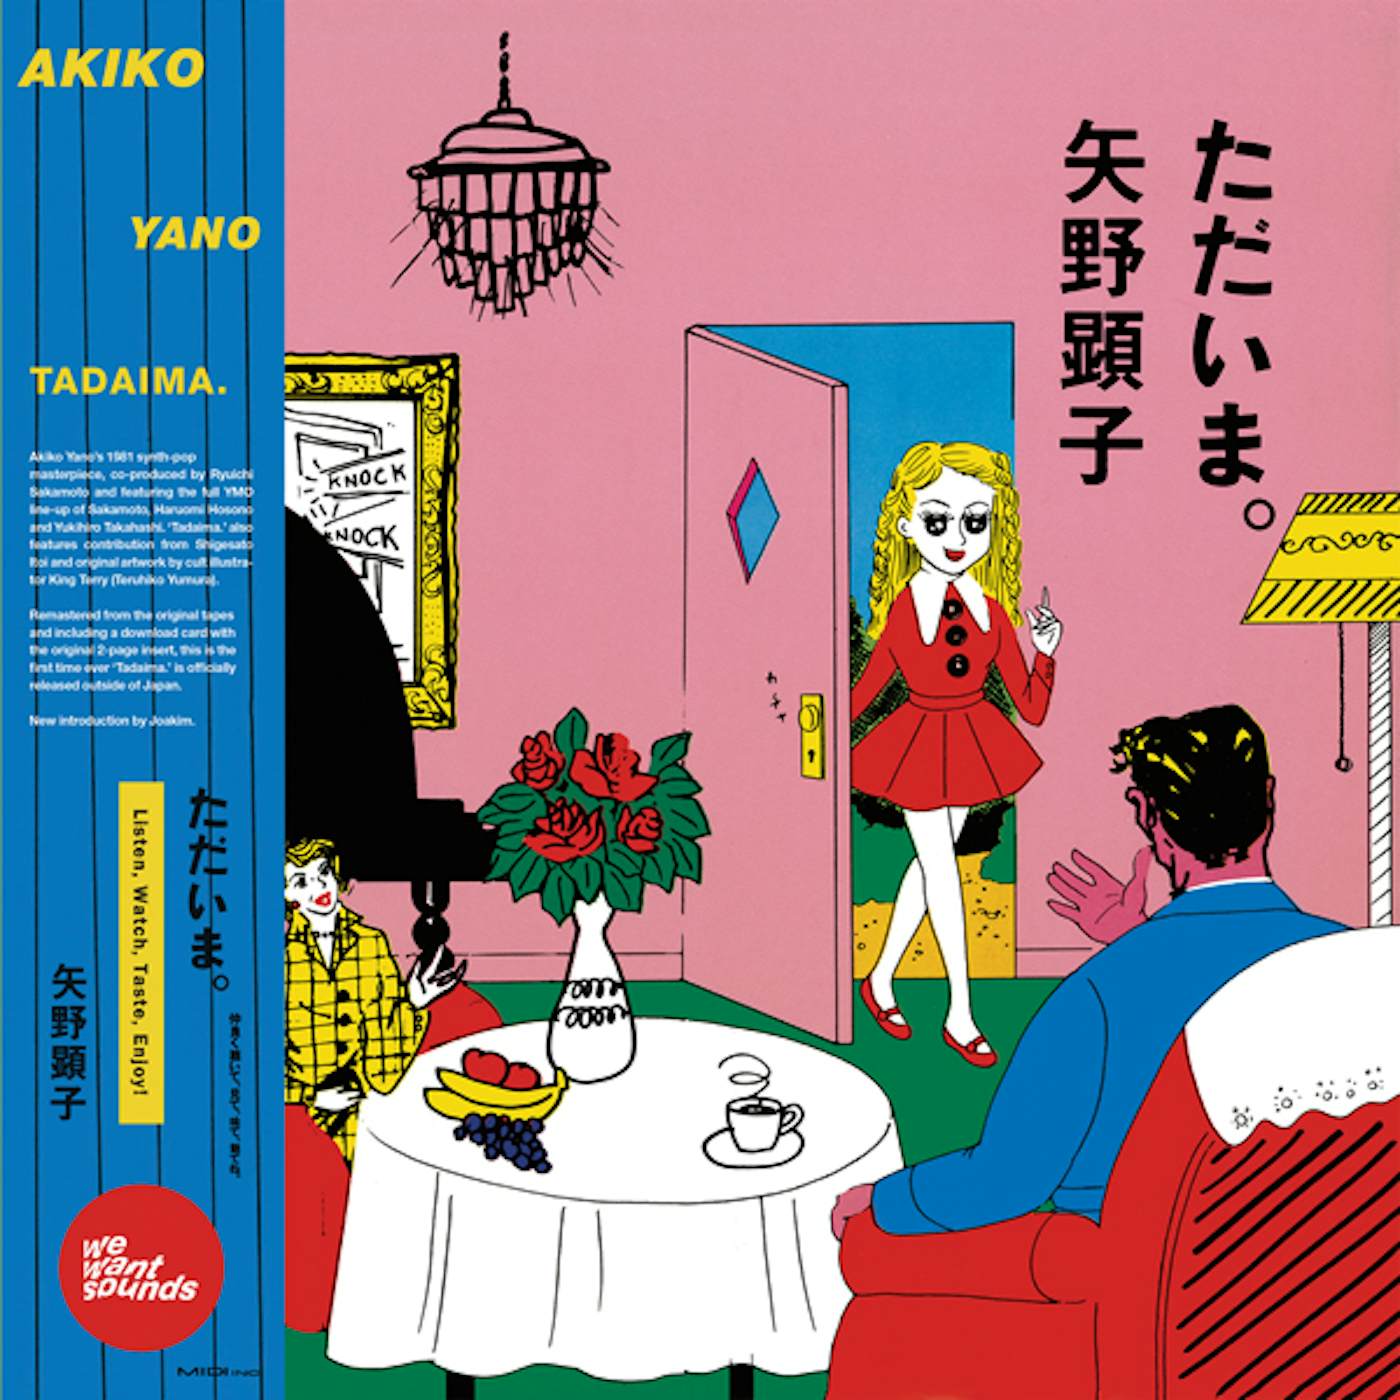 Akiko Yano TADAIMA Vinyl Record